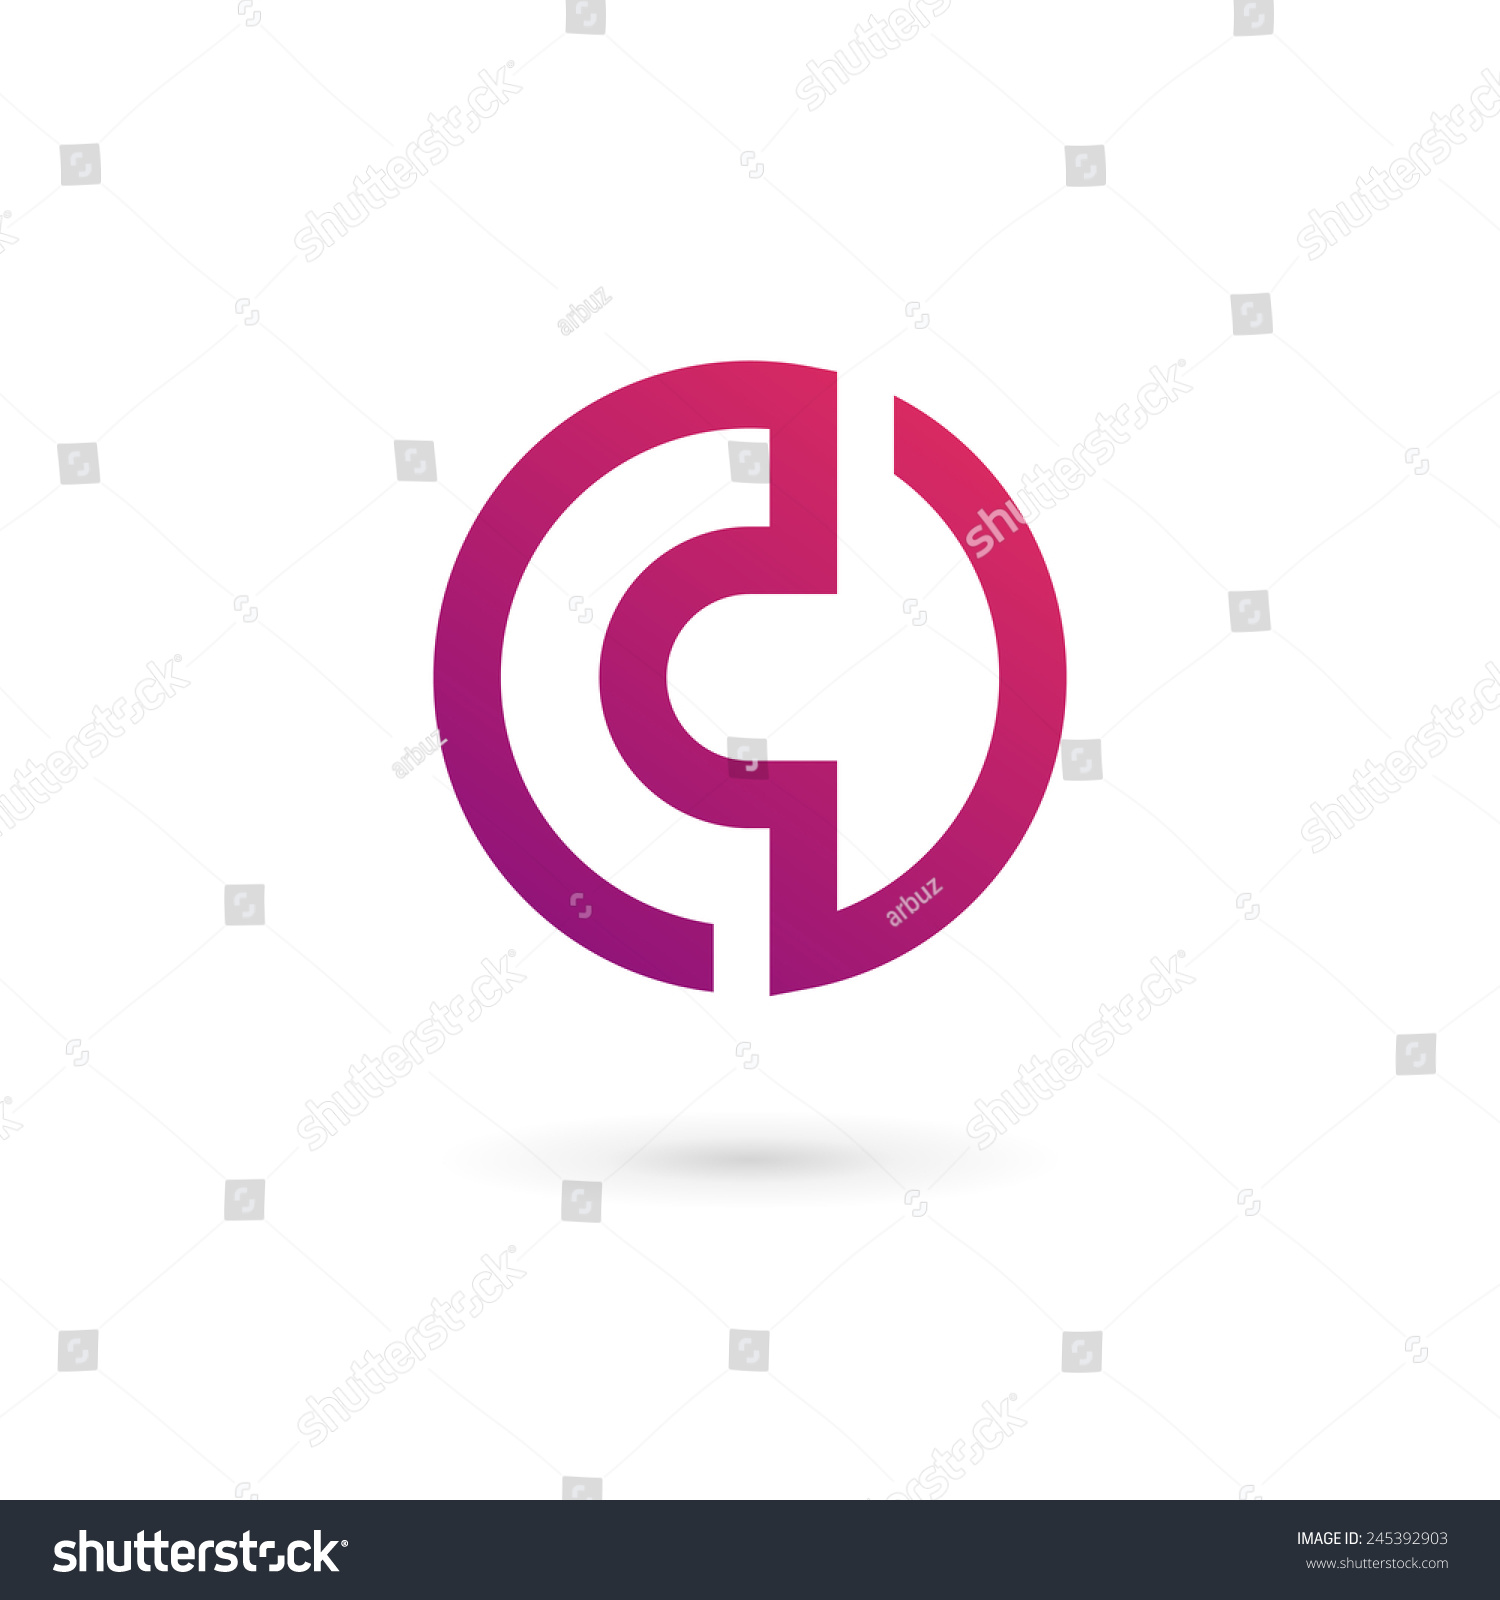 stock vector letter c logo icon design template elements